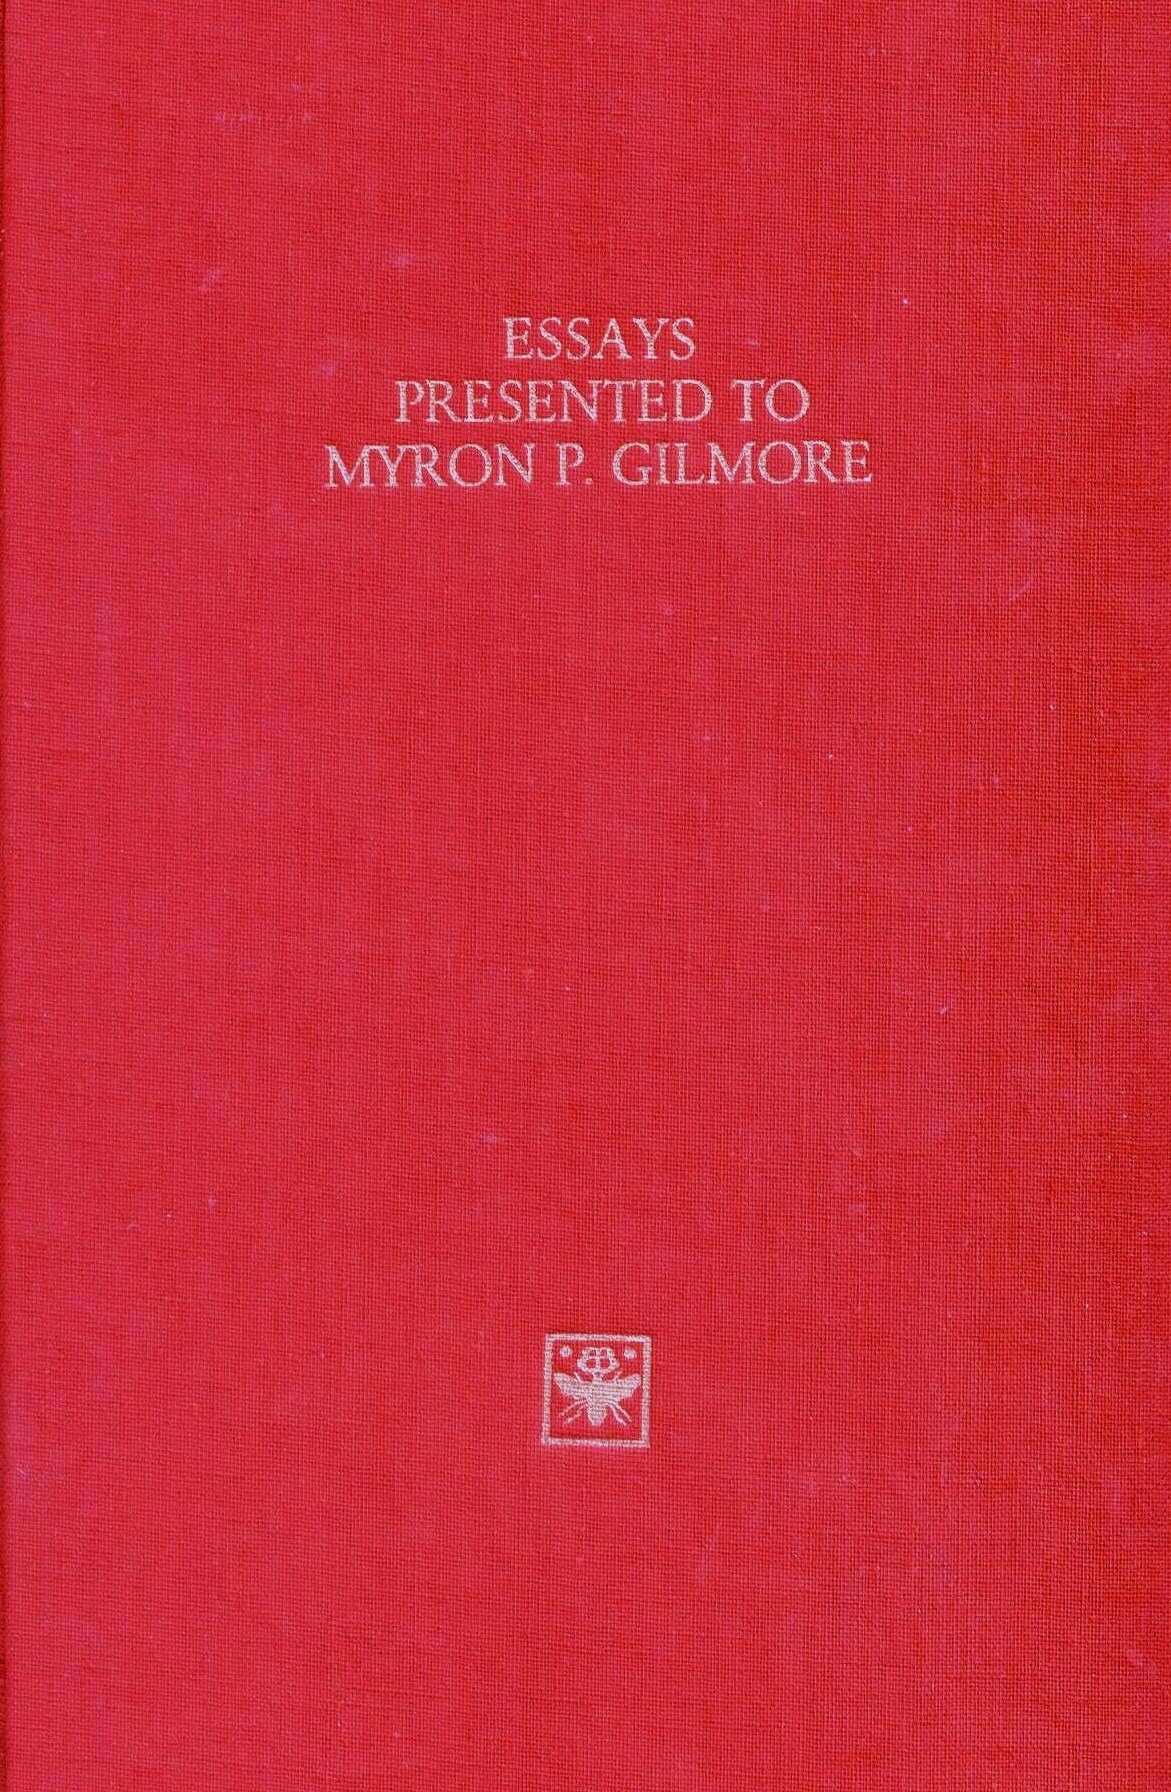 Essays Presented to Myron P. Gilmore